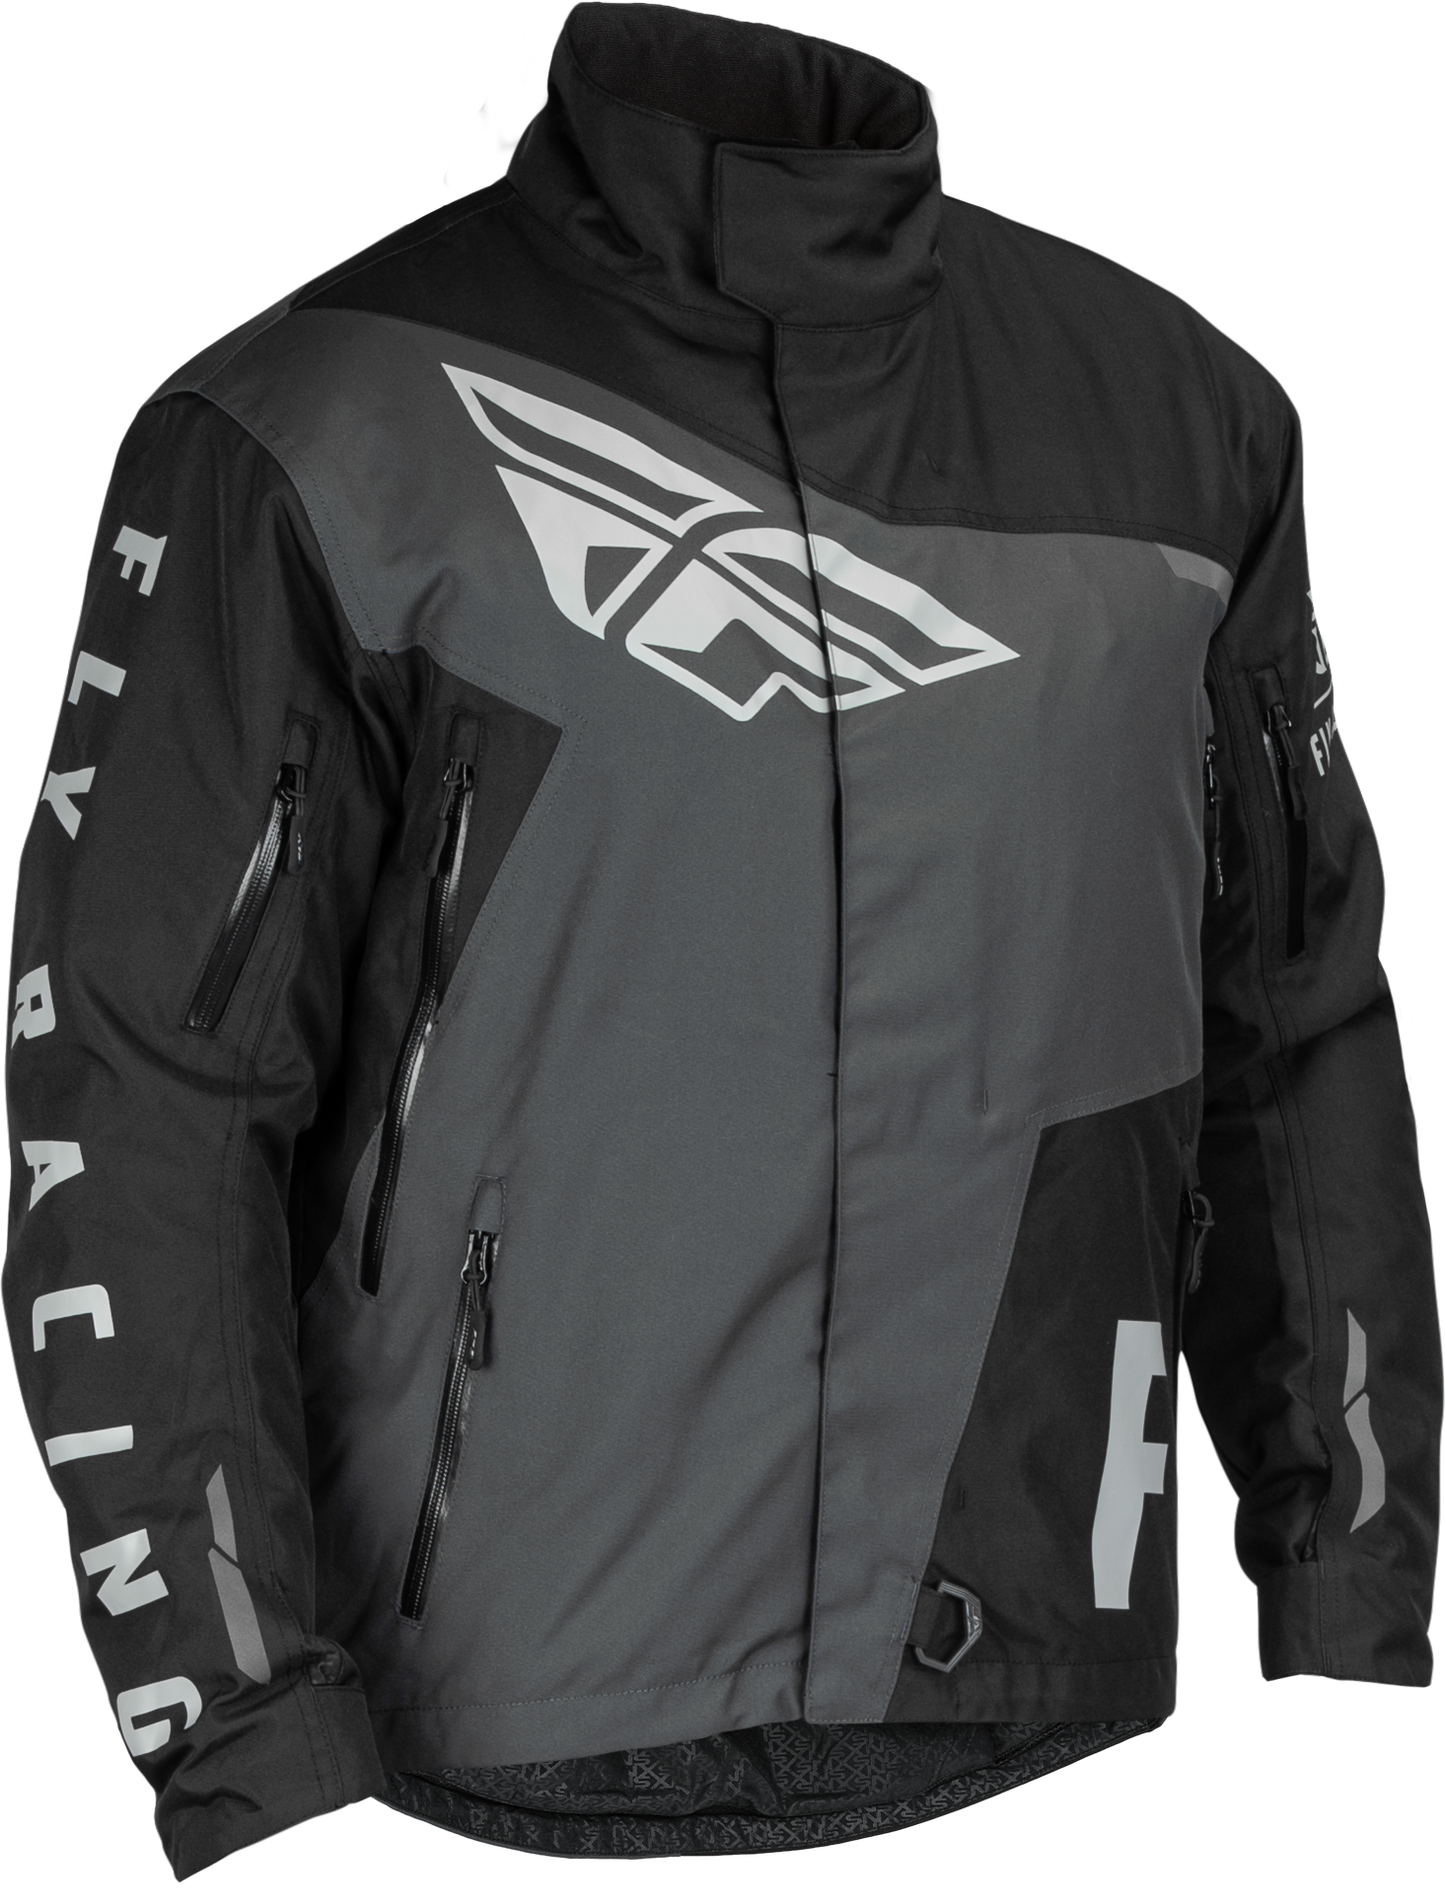 FLY RACING Snx Pro Jacket Black/Grey Sm 470-5400S